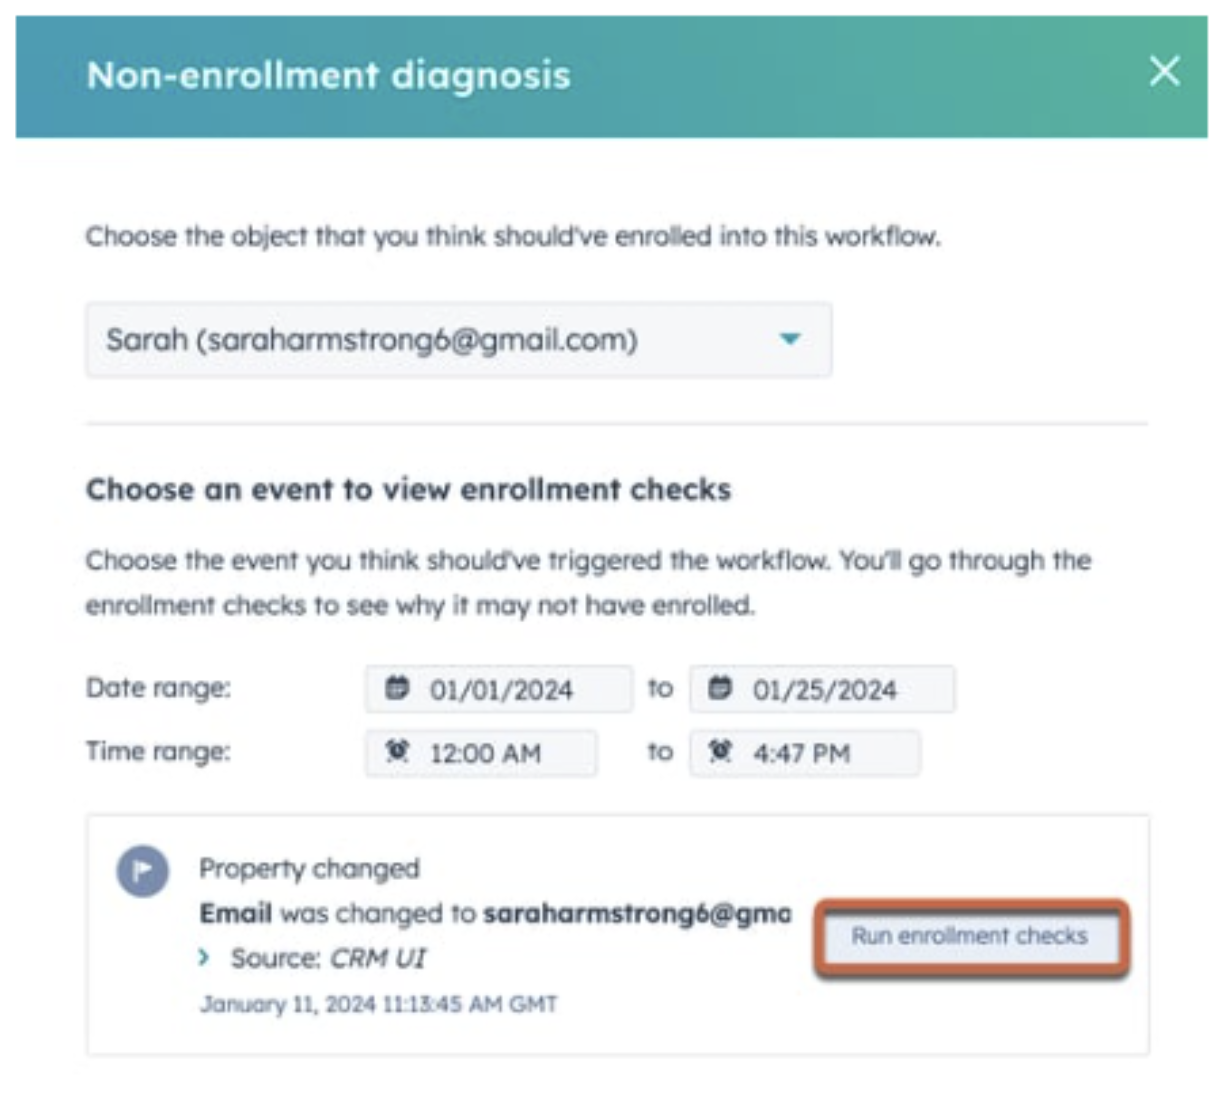 Workflow Enrollment Diagnosis